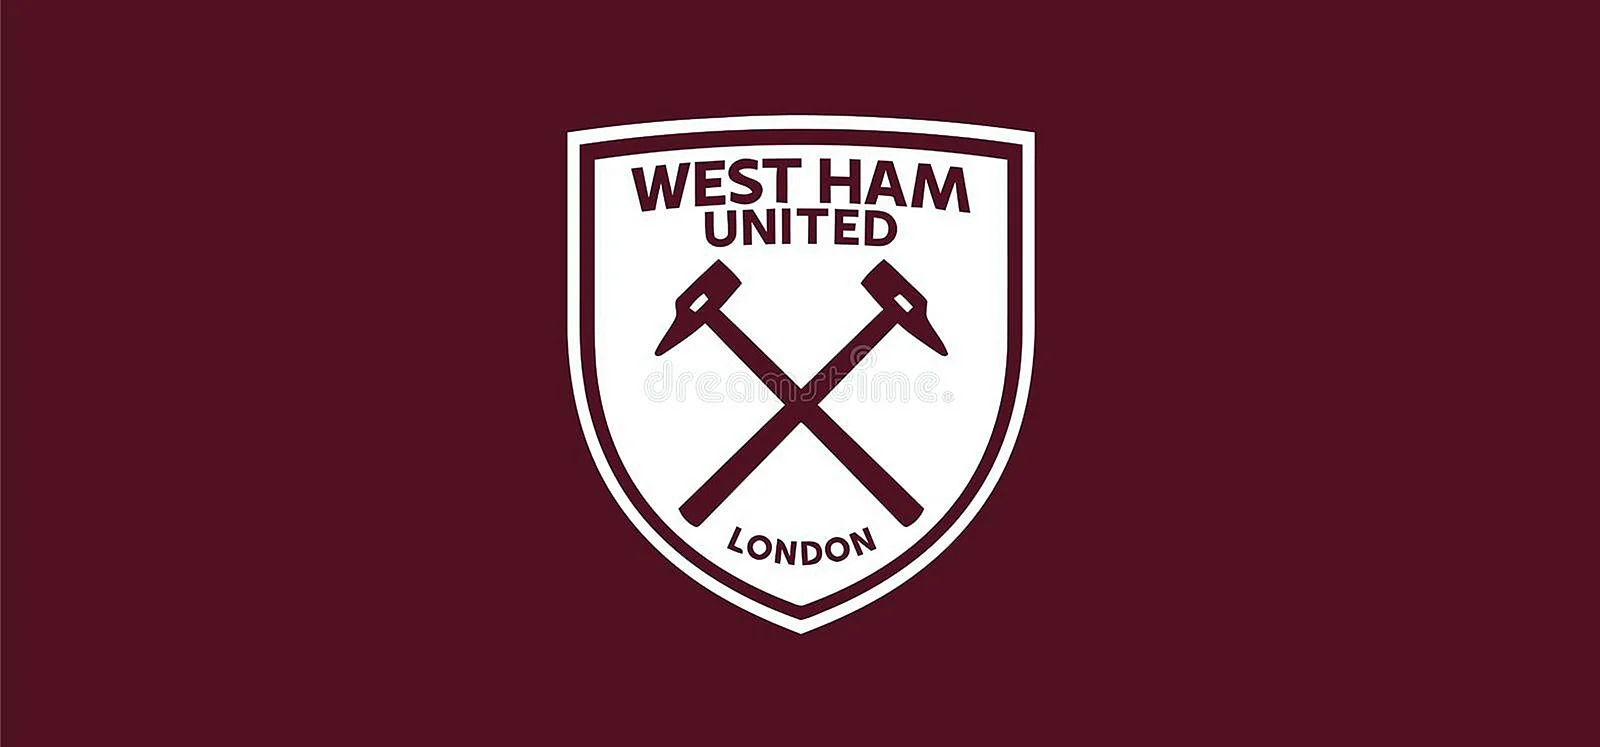 West Ham United New Logo Wallpaper